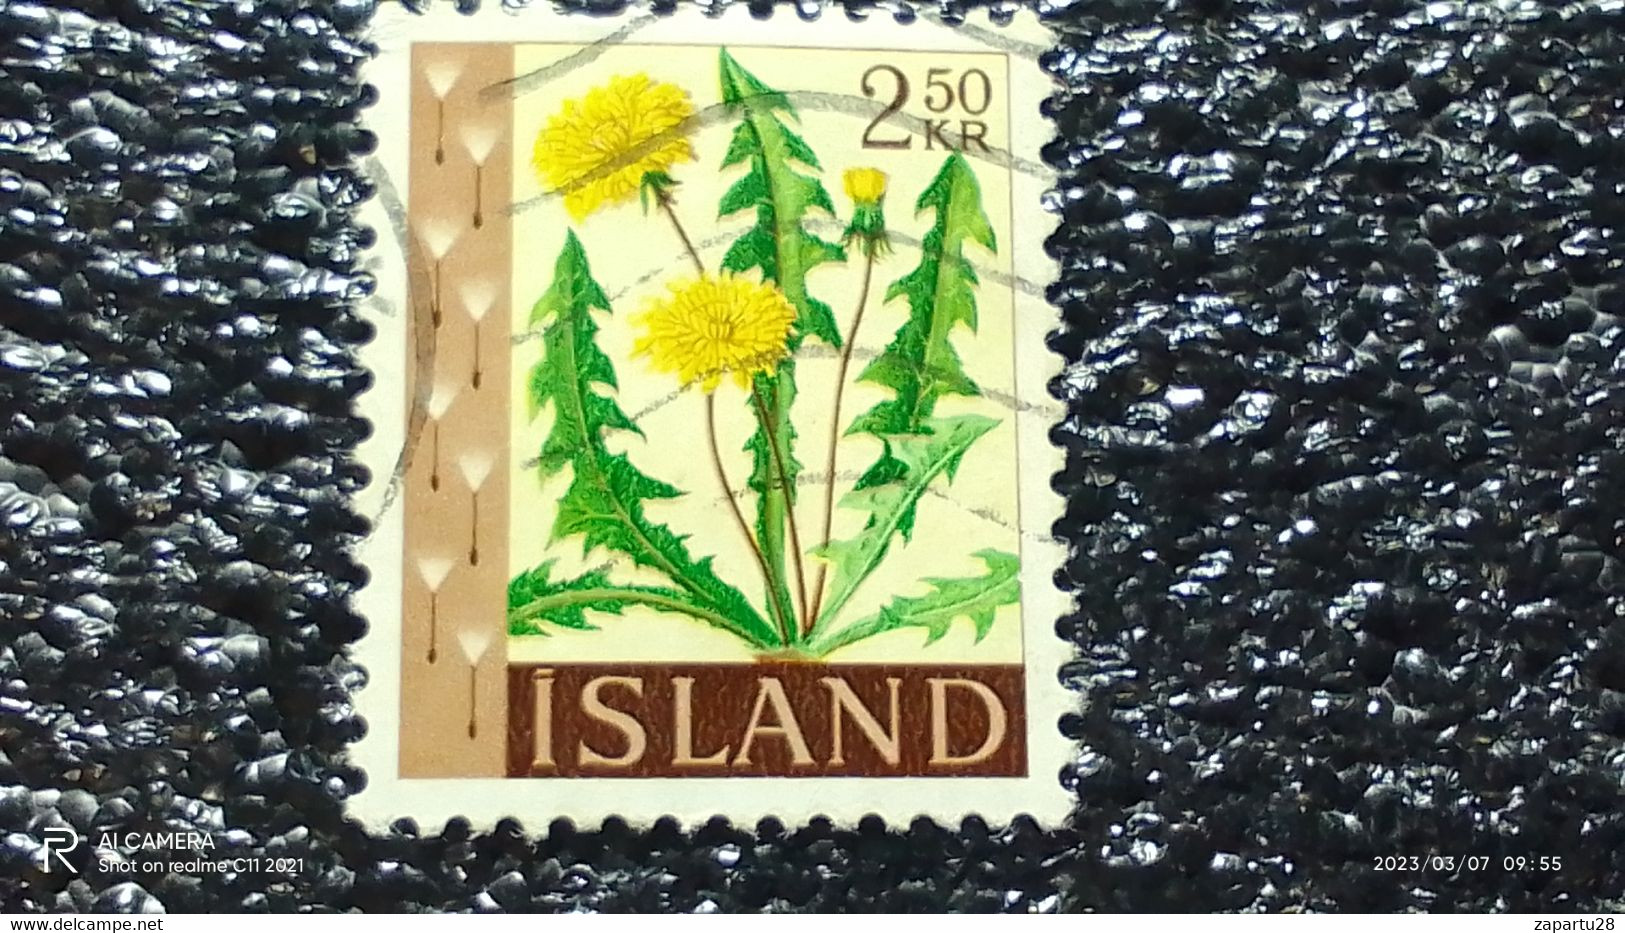 ISLAND-1960- 70     2.50KR  USED - Gebraucht